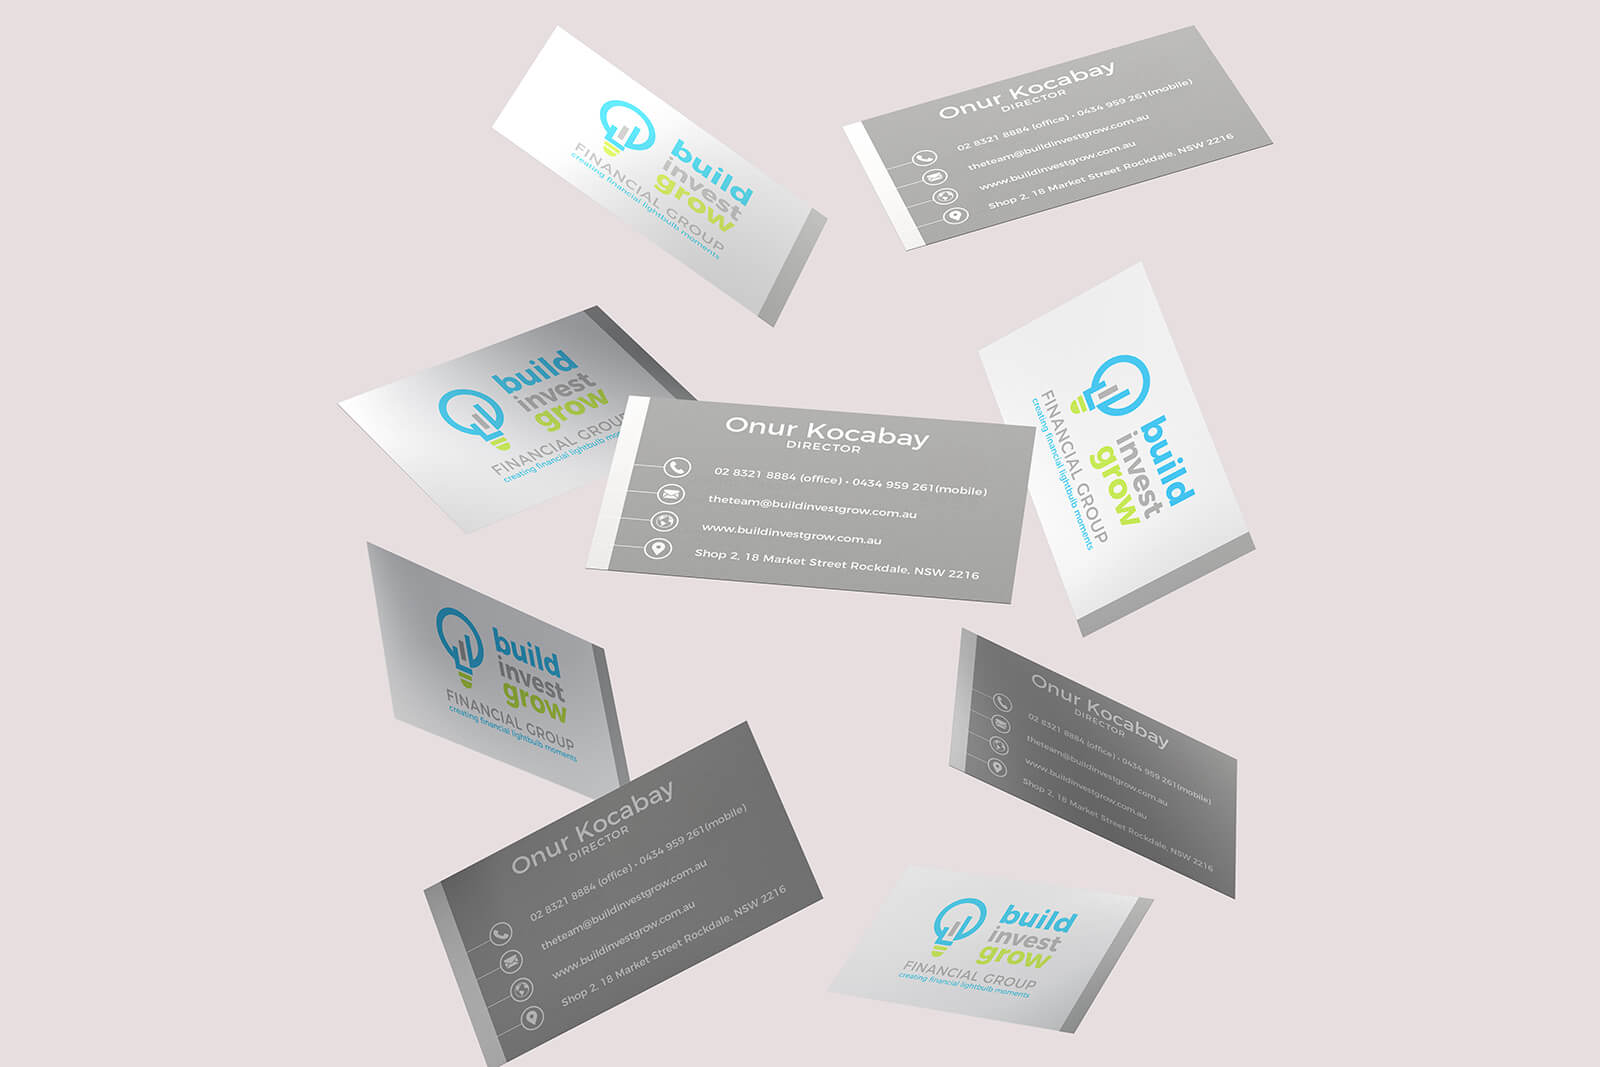 business cards, stationery graphic design service for financial company by freelance designer metrodesign bexley kogarah sydney